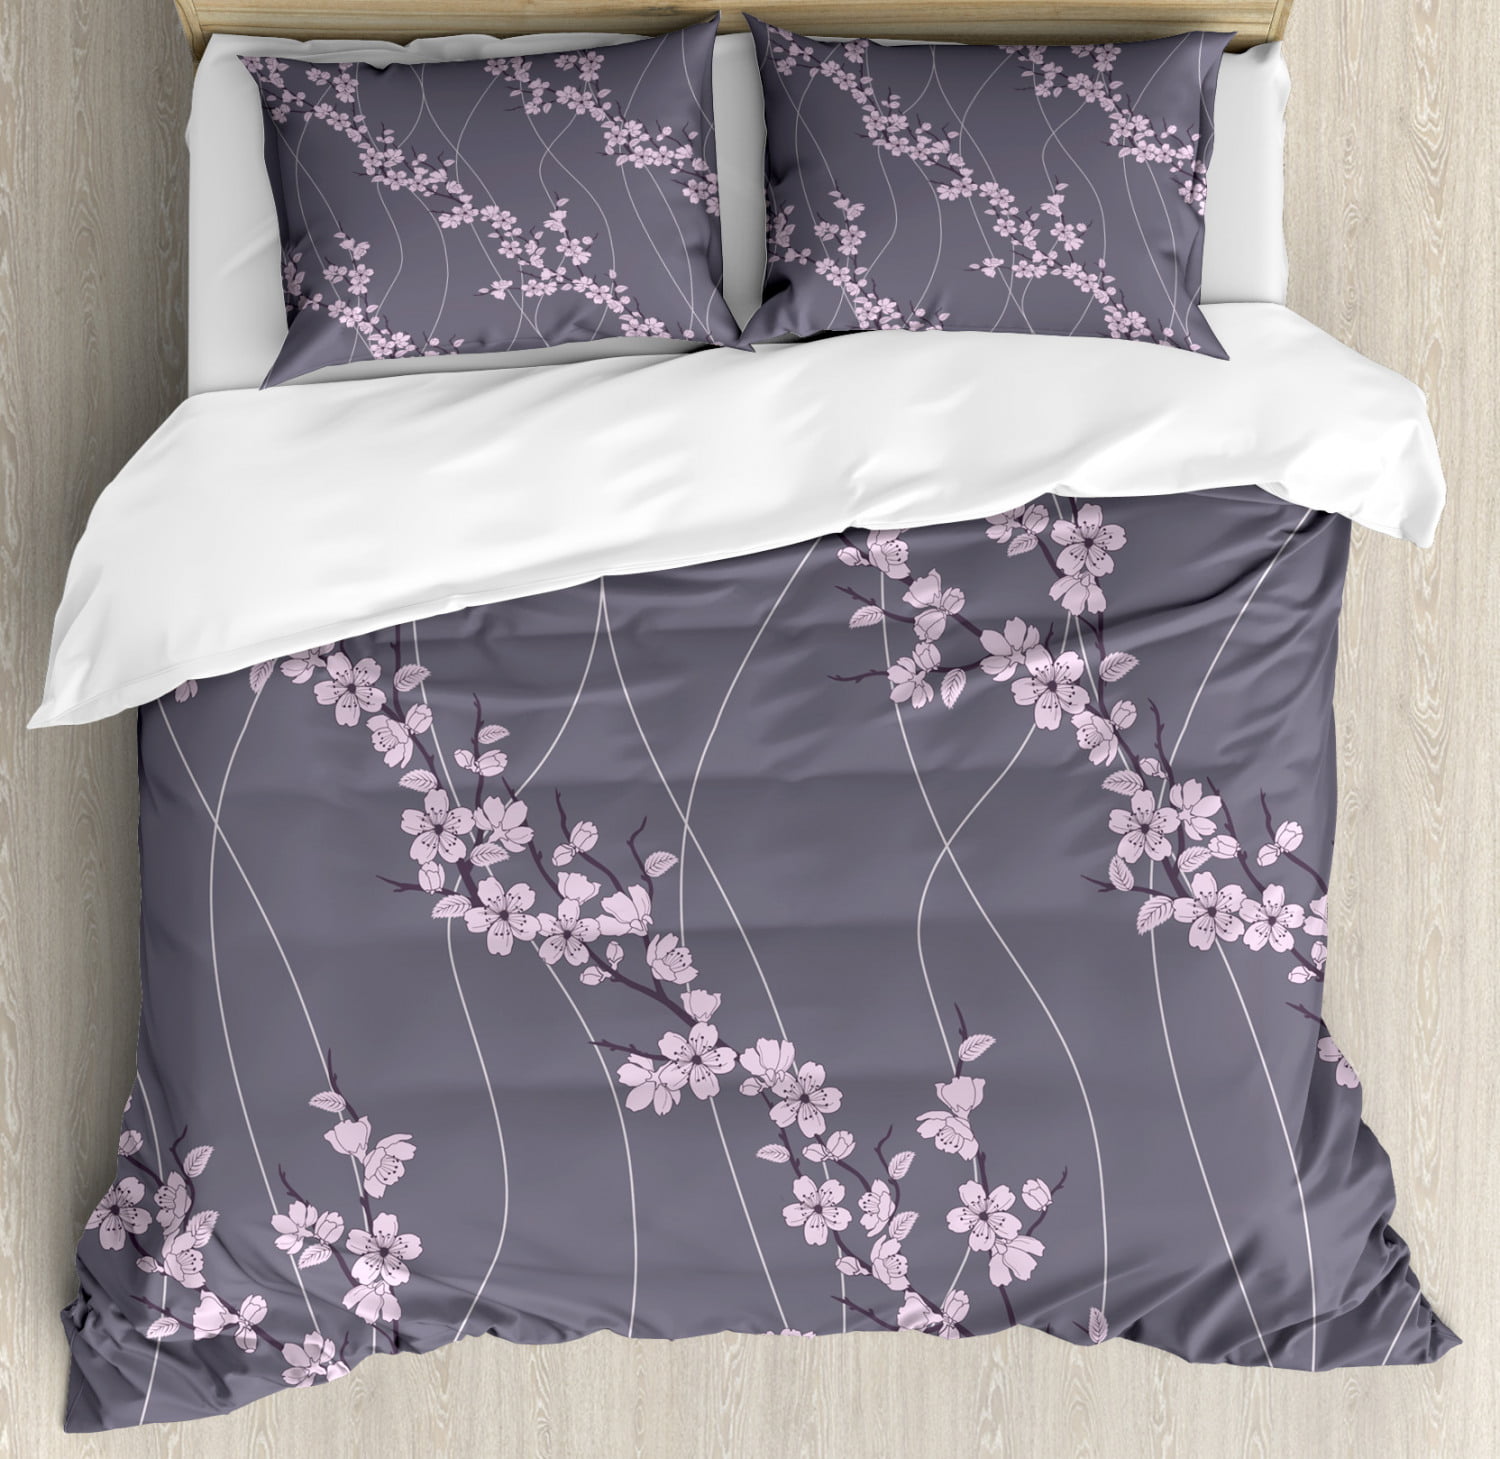 Kira paisley Stripes Duvet Cover Polycotton Printed Floral Bedding Set All Sizes 